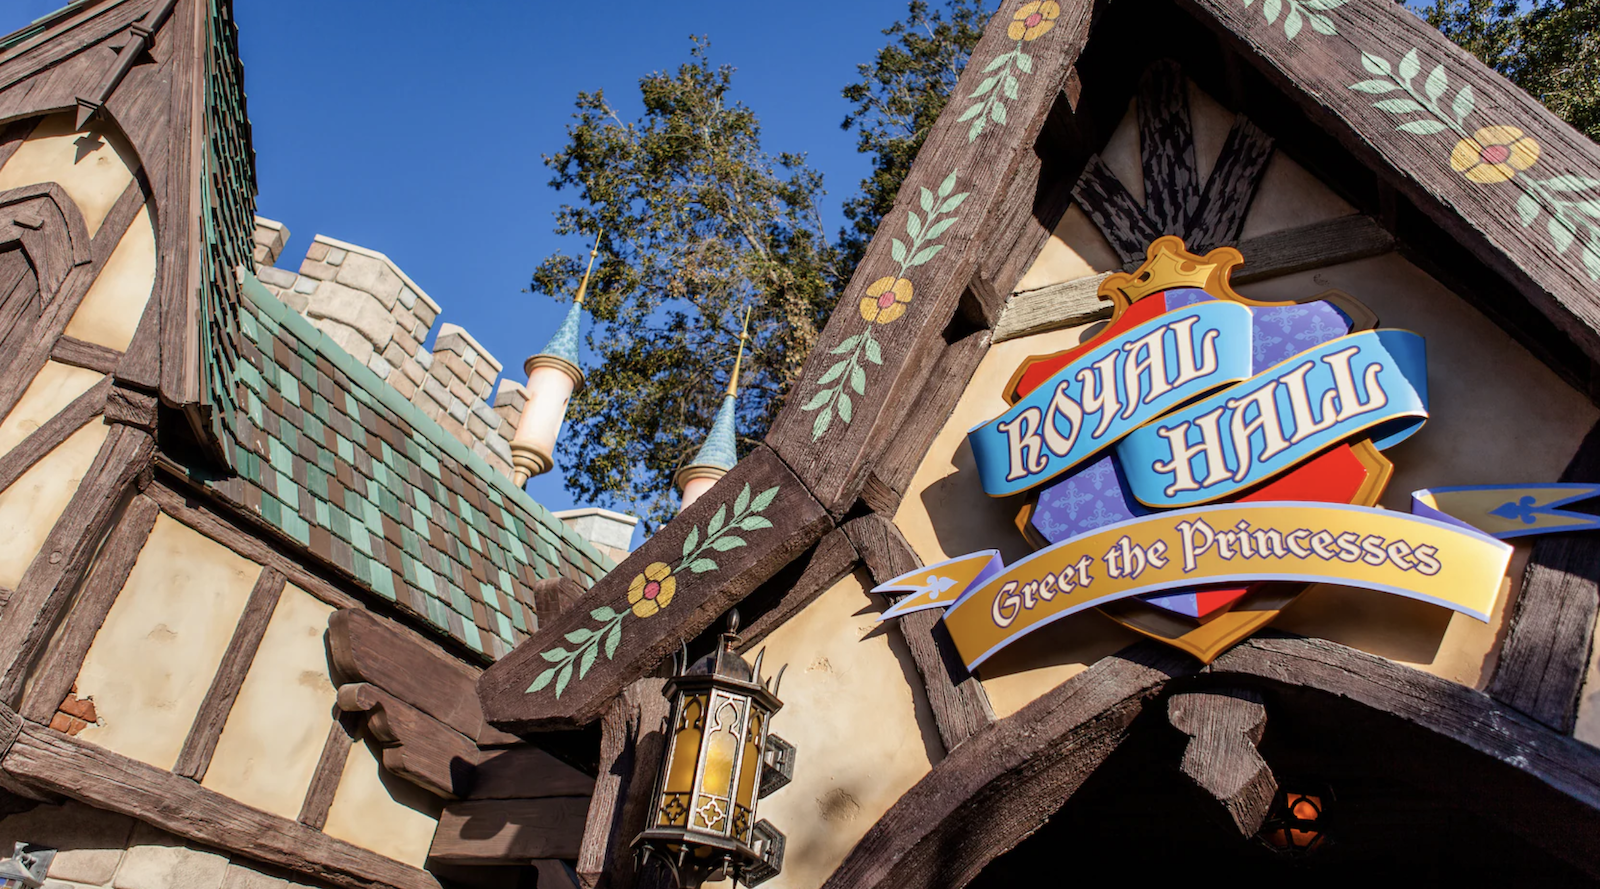 Where to meet Asha from 'Wish' at Disney World and Disneyland